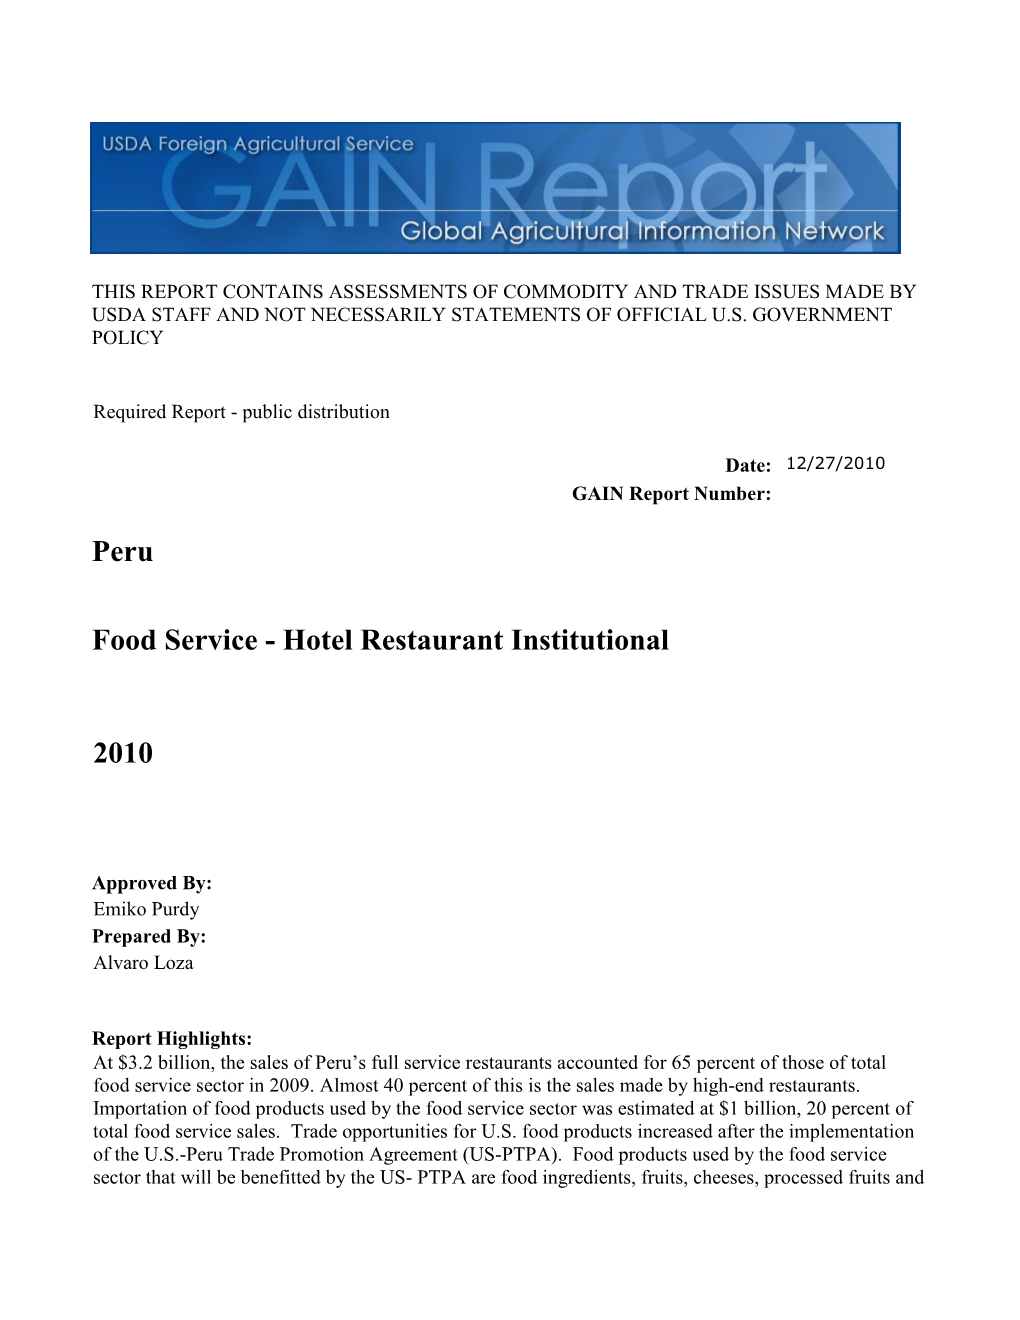 2010 Food Service